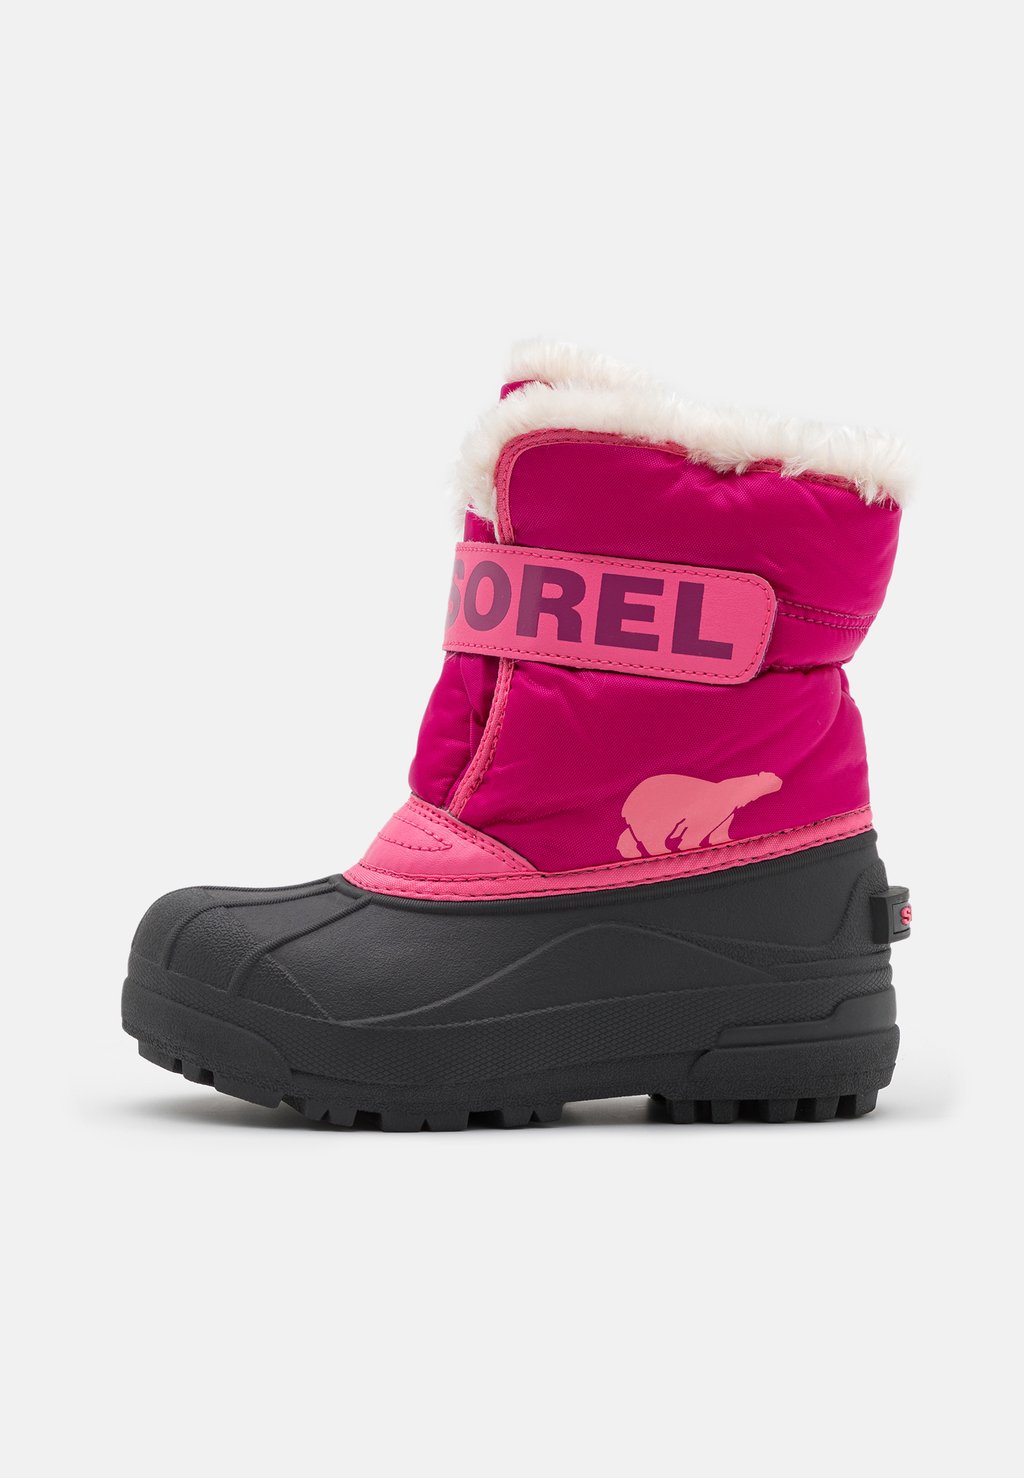 Снегоступы/зимние сапоги CHILDRENS Sorel, цвет tropic pink/deep blush цена и фото